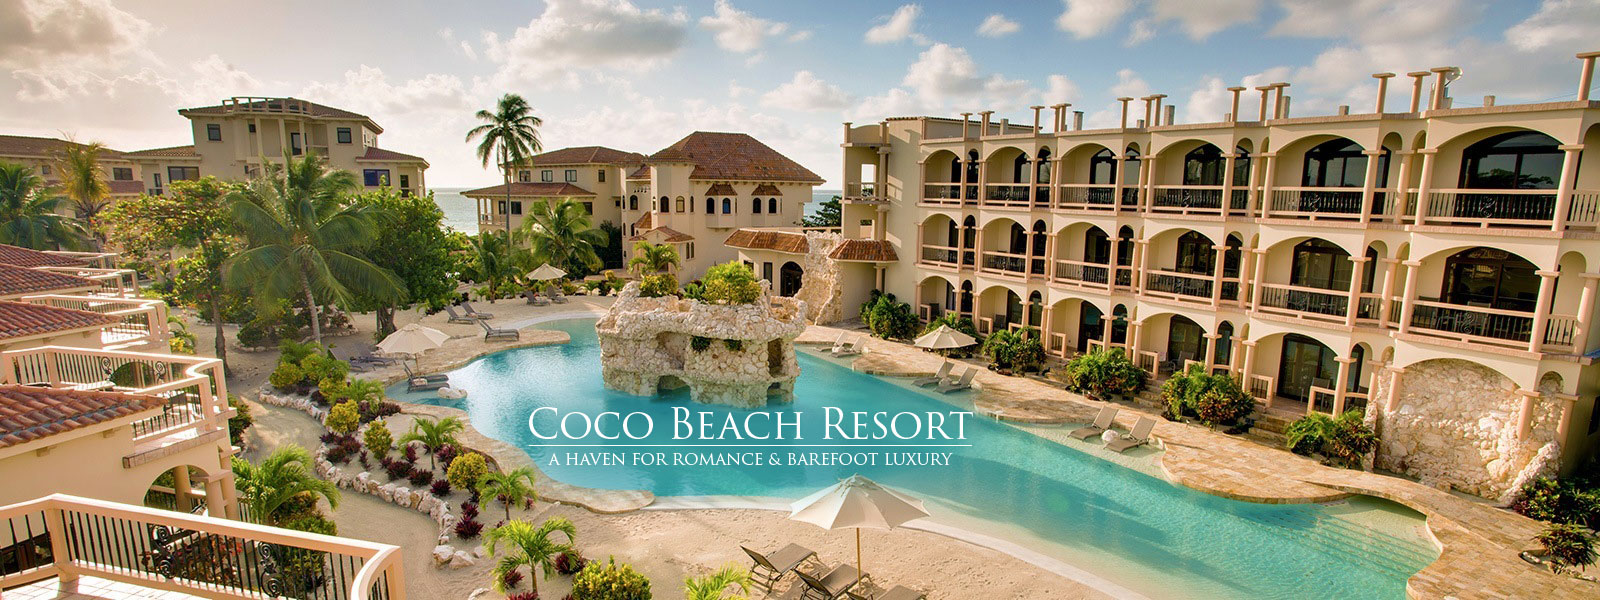 Coco Beach Resort Belize Sandy Point Resorts